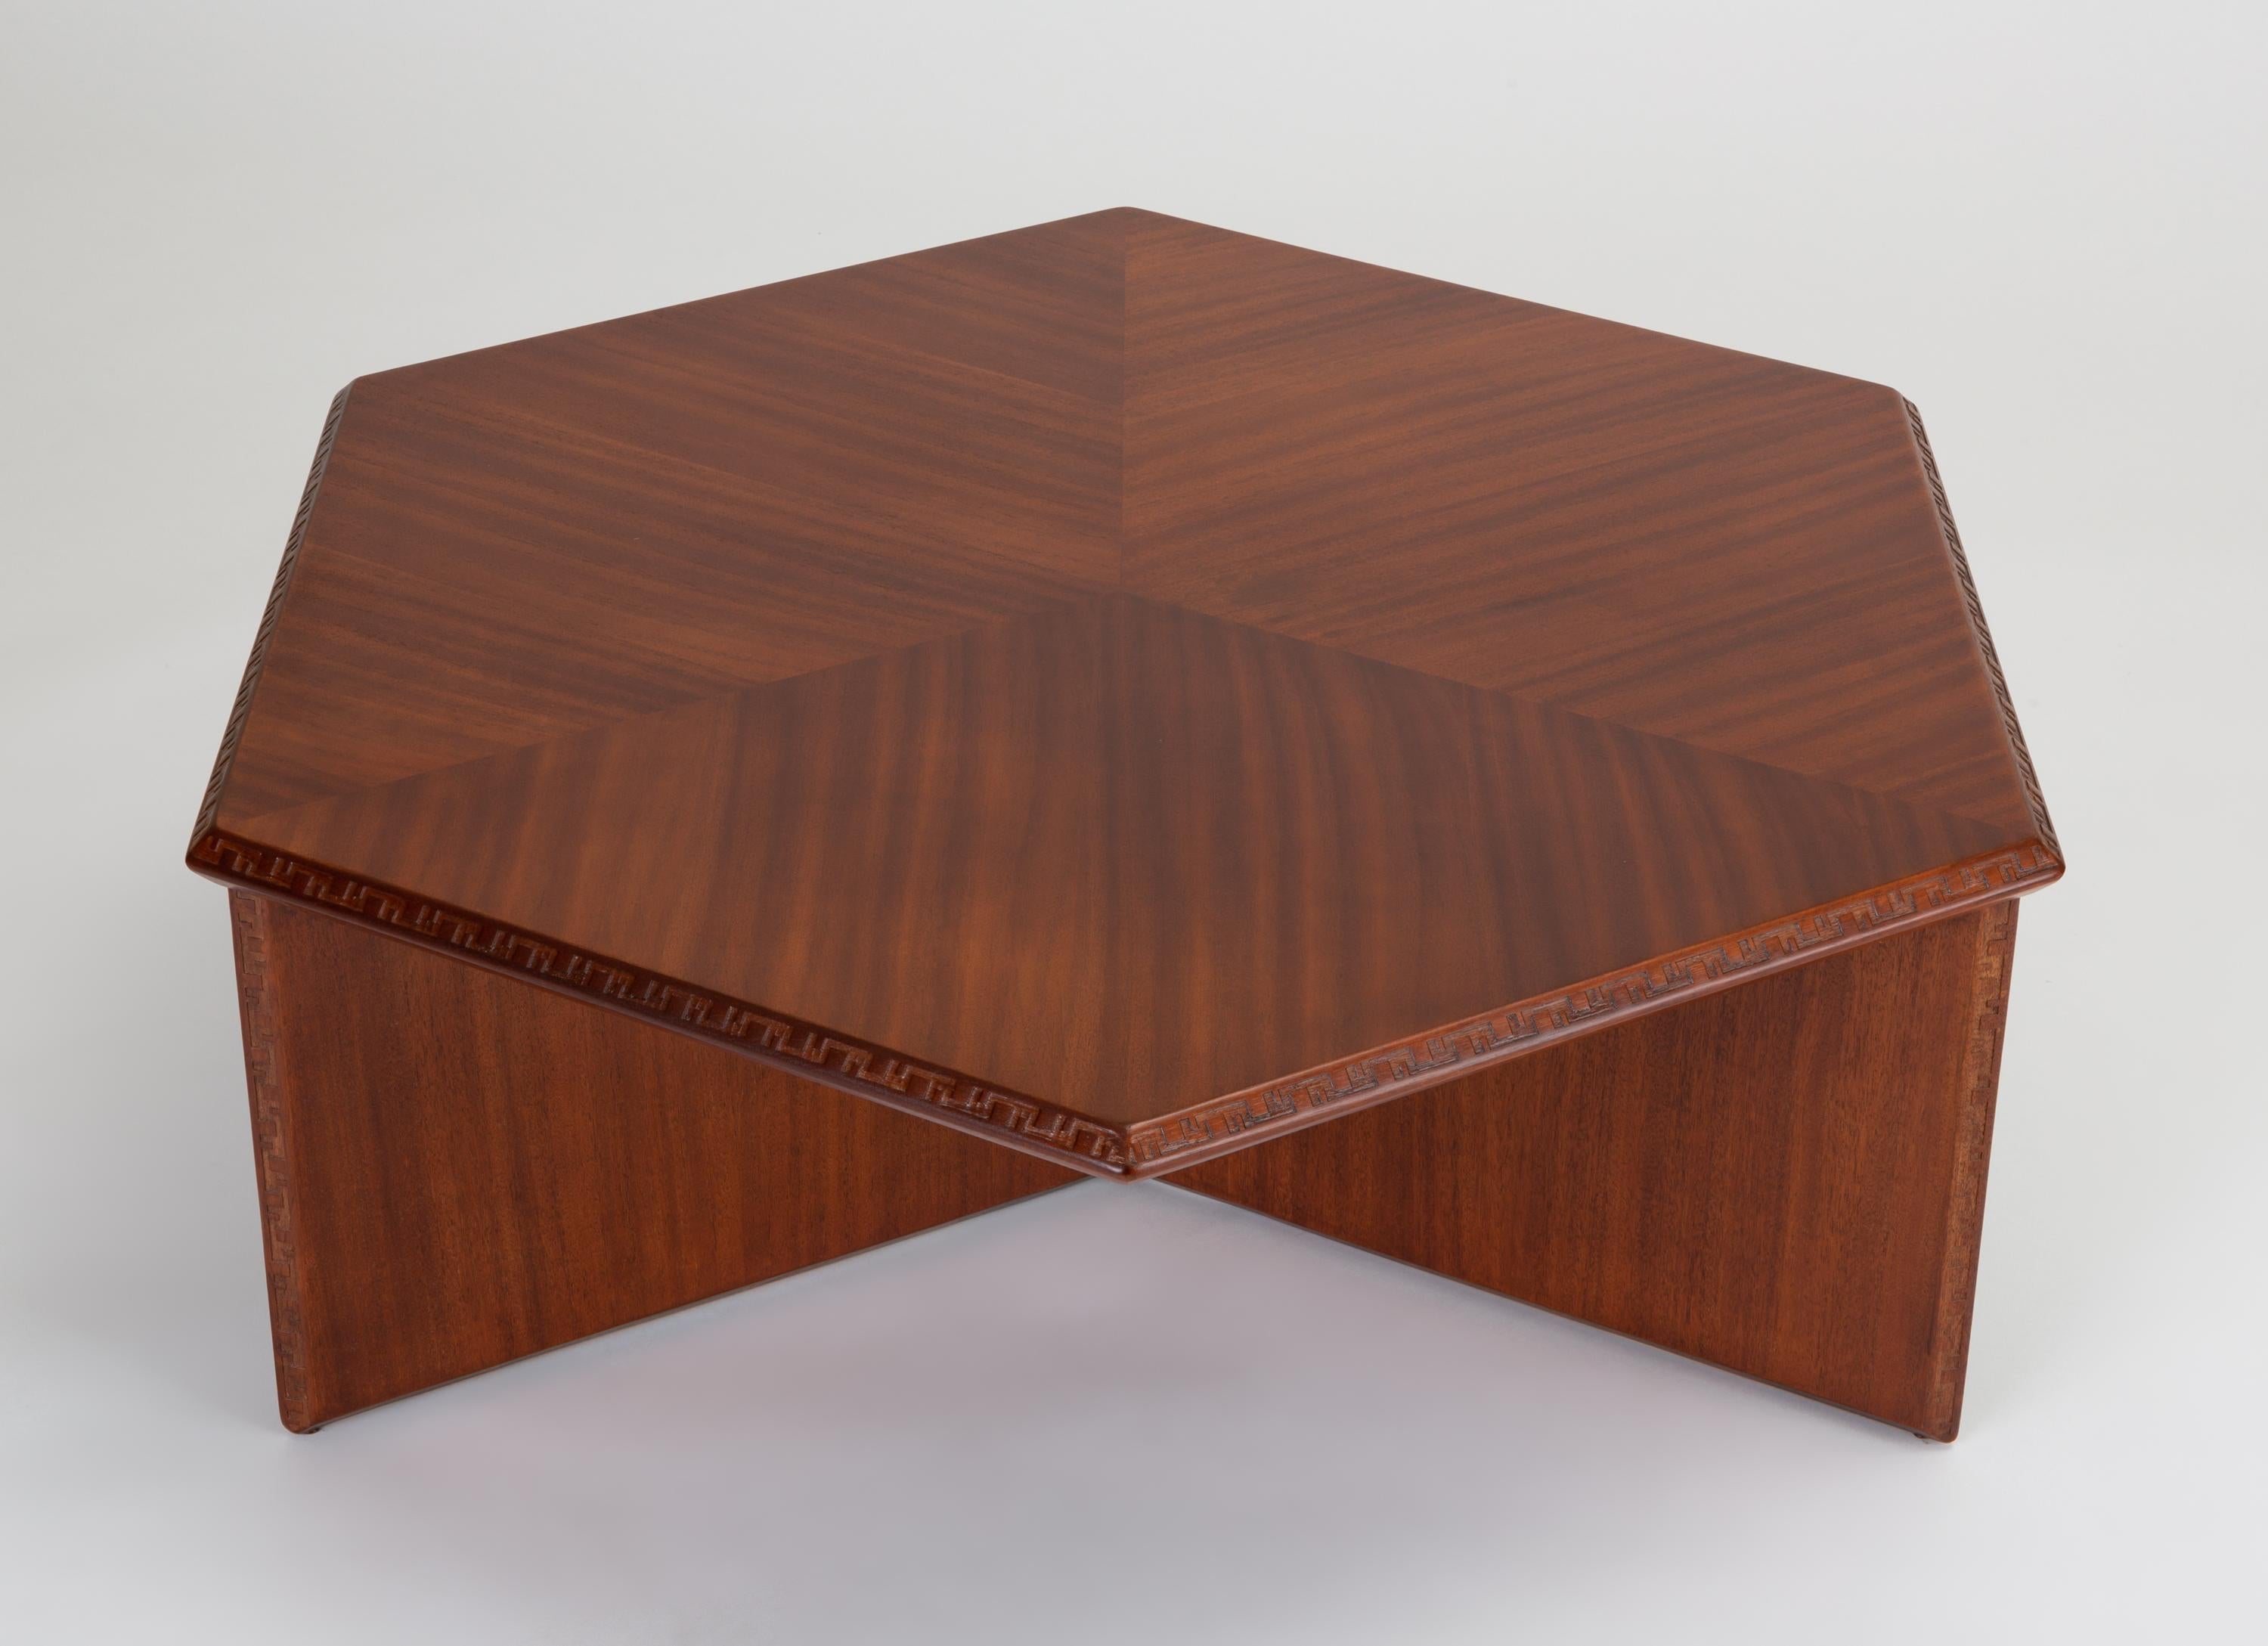 Frank Lloyd Wright “Taliesin” Coffee Table for Heritage-Henredon (Mahagoni)